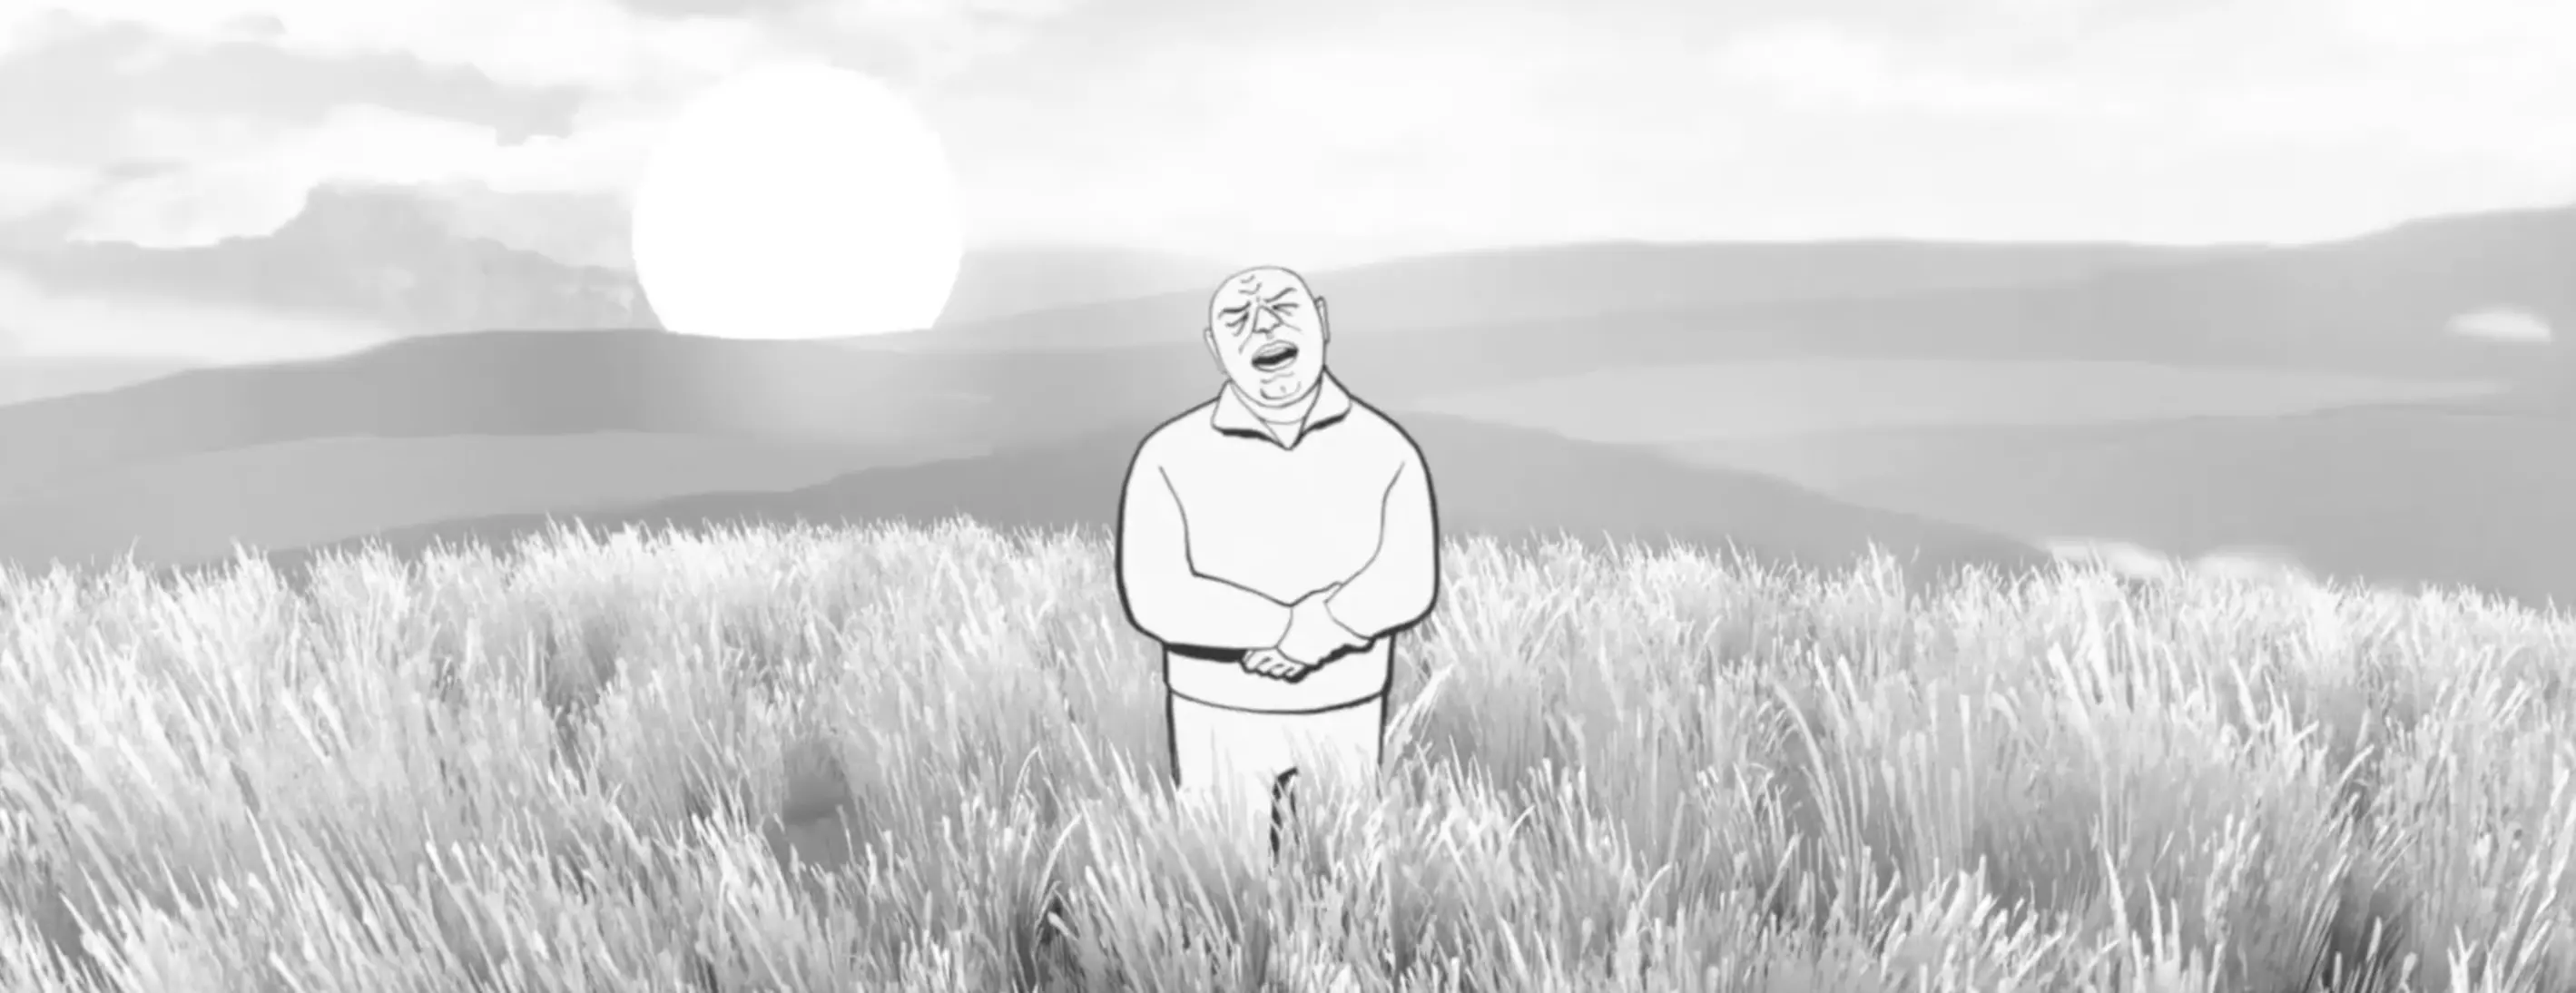 Illustration of man singing in a field